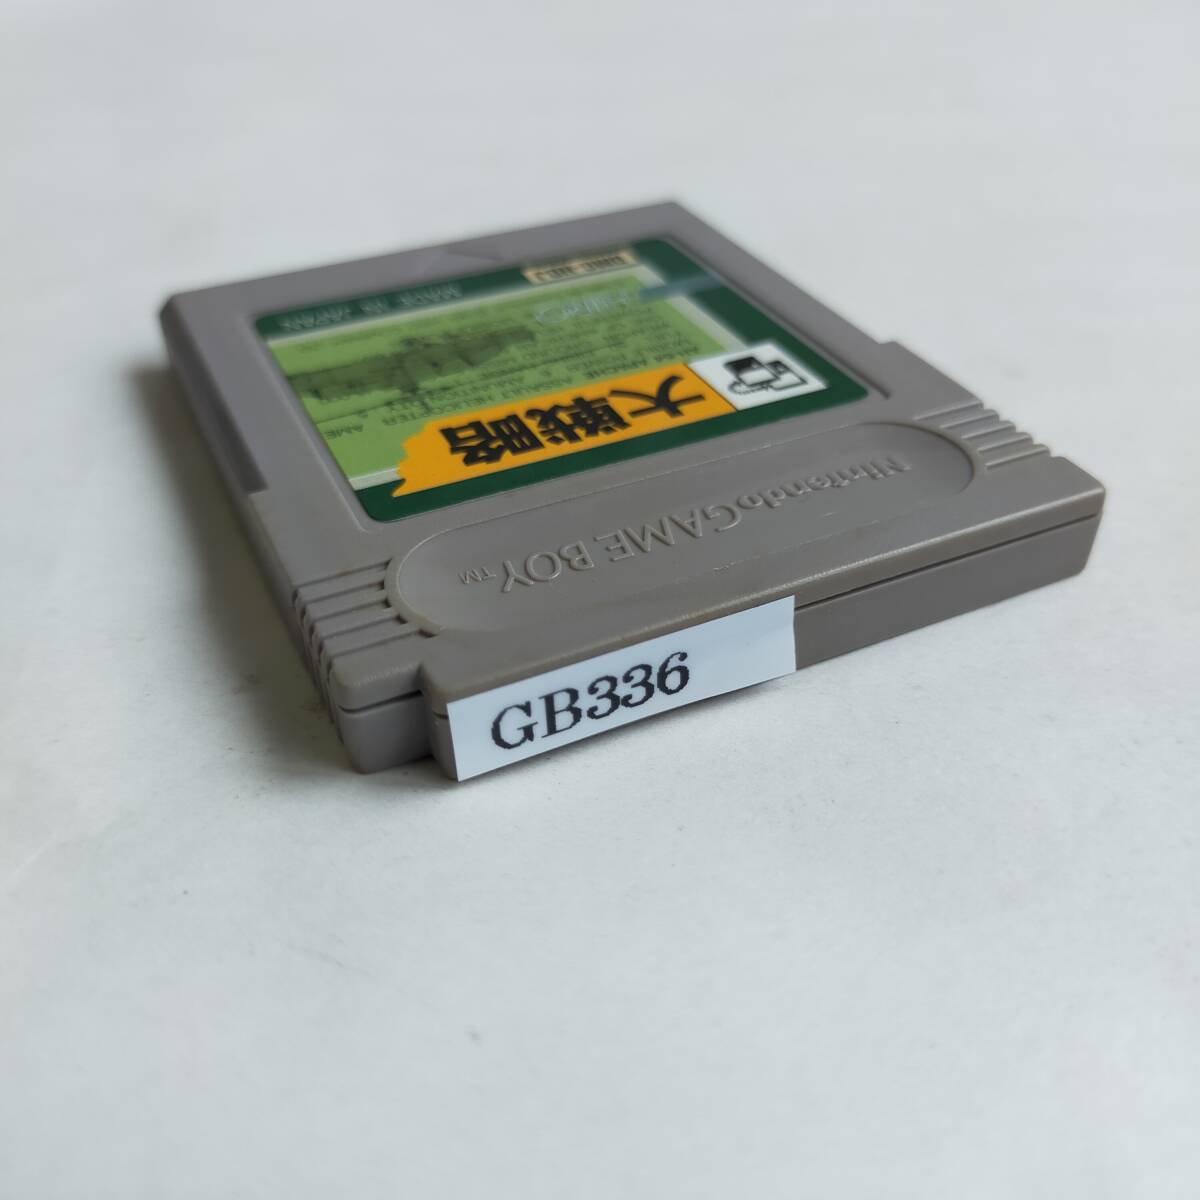 大戦略 GameBoy ゲームボーイ 動作確認済・端子清掃済[GB7850_336]_画像6